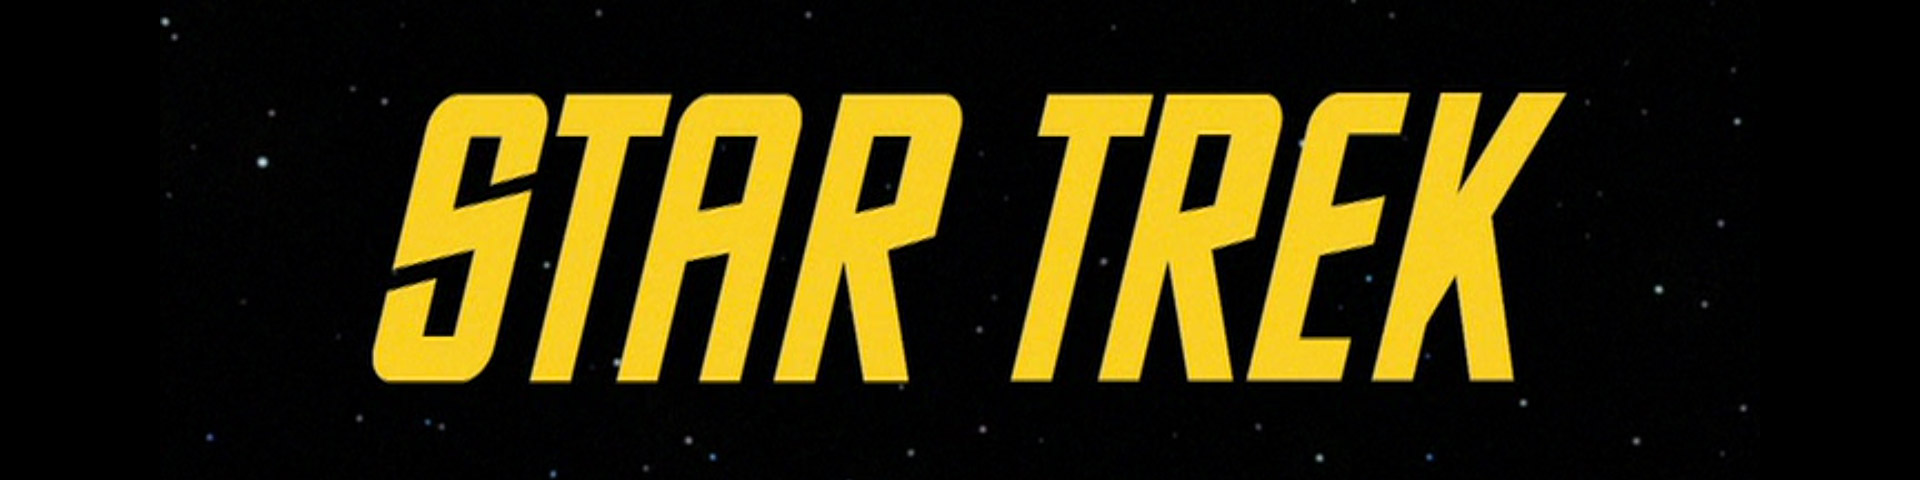 star-trek-title-sequences.jpg